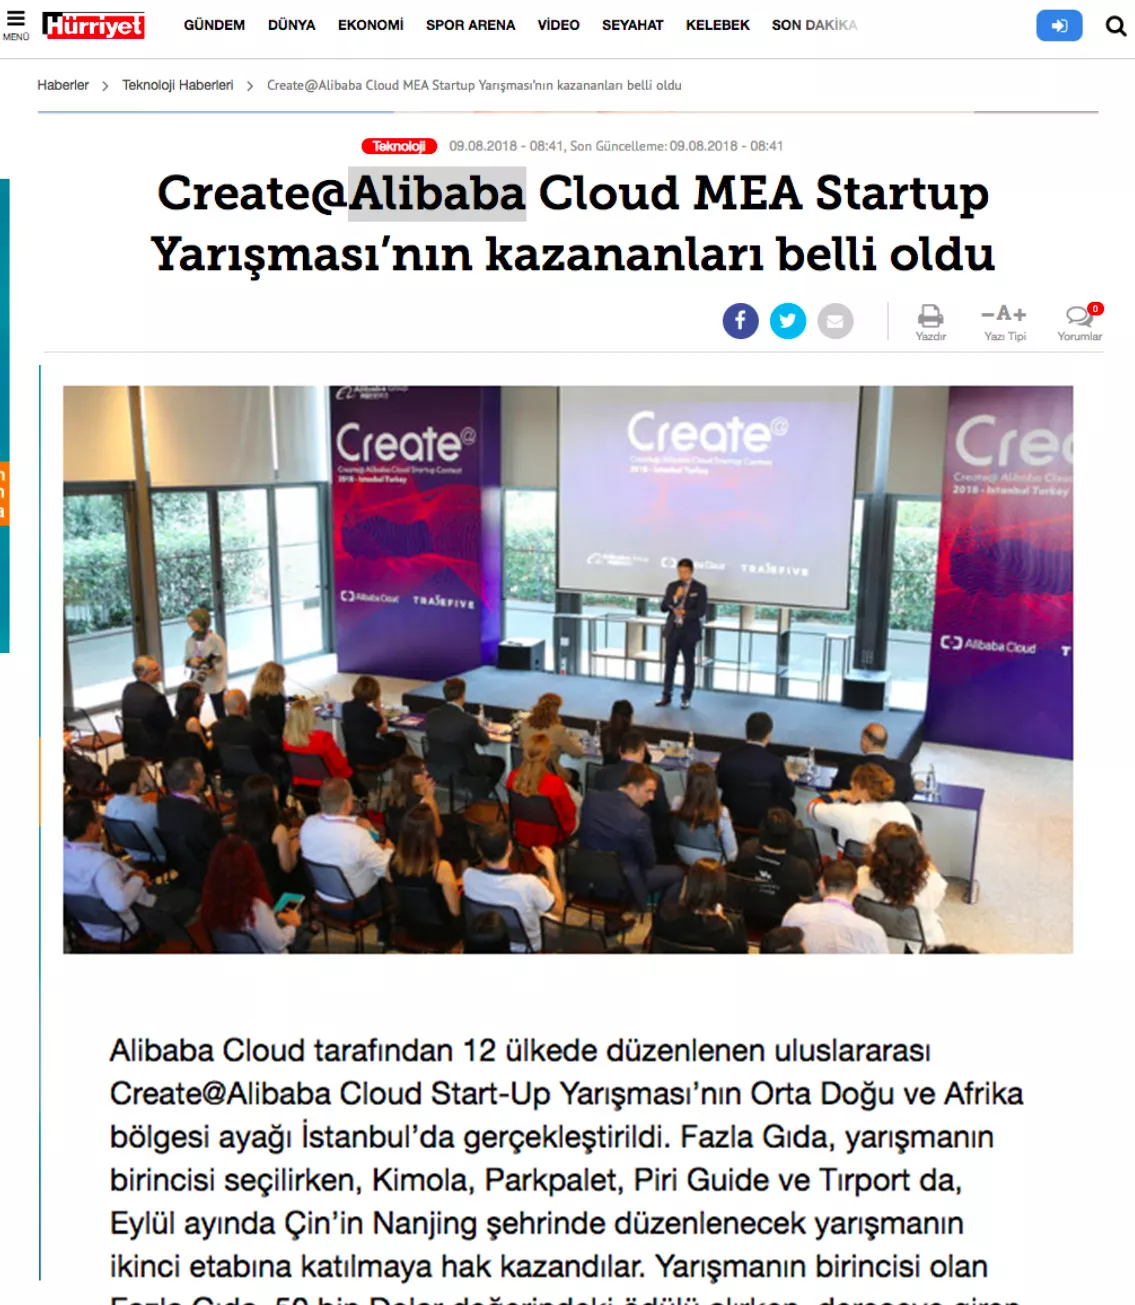 Winners of Create@Alibaba Cloud MEA Startup Contest Announced